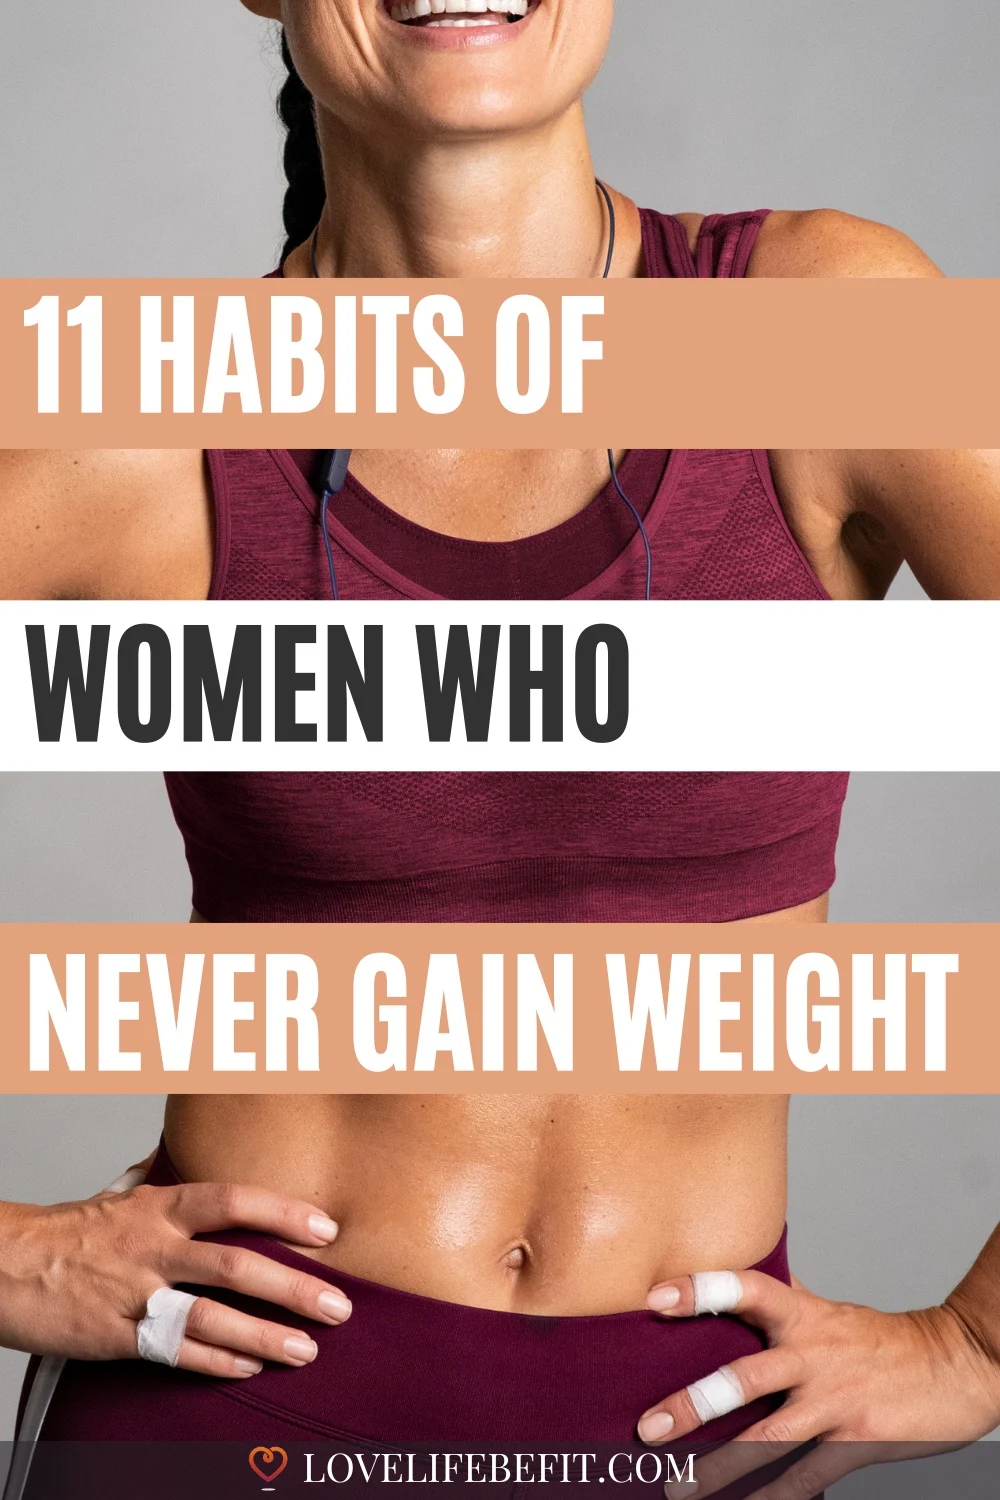 healthy habits for women